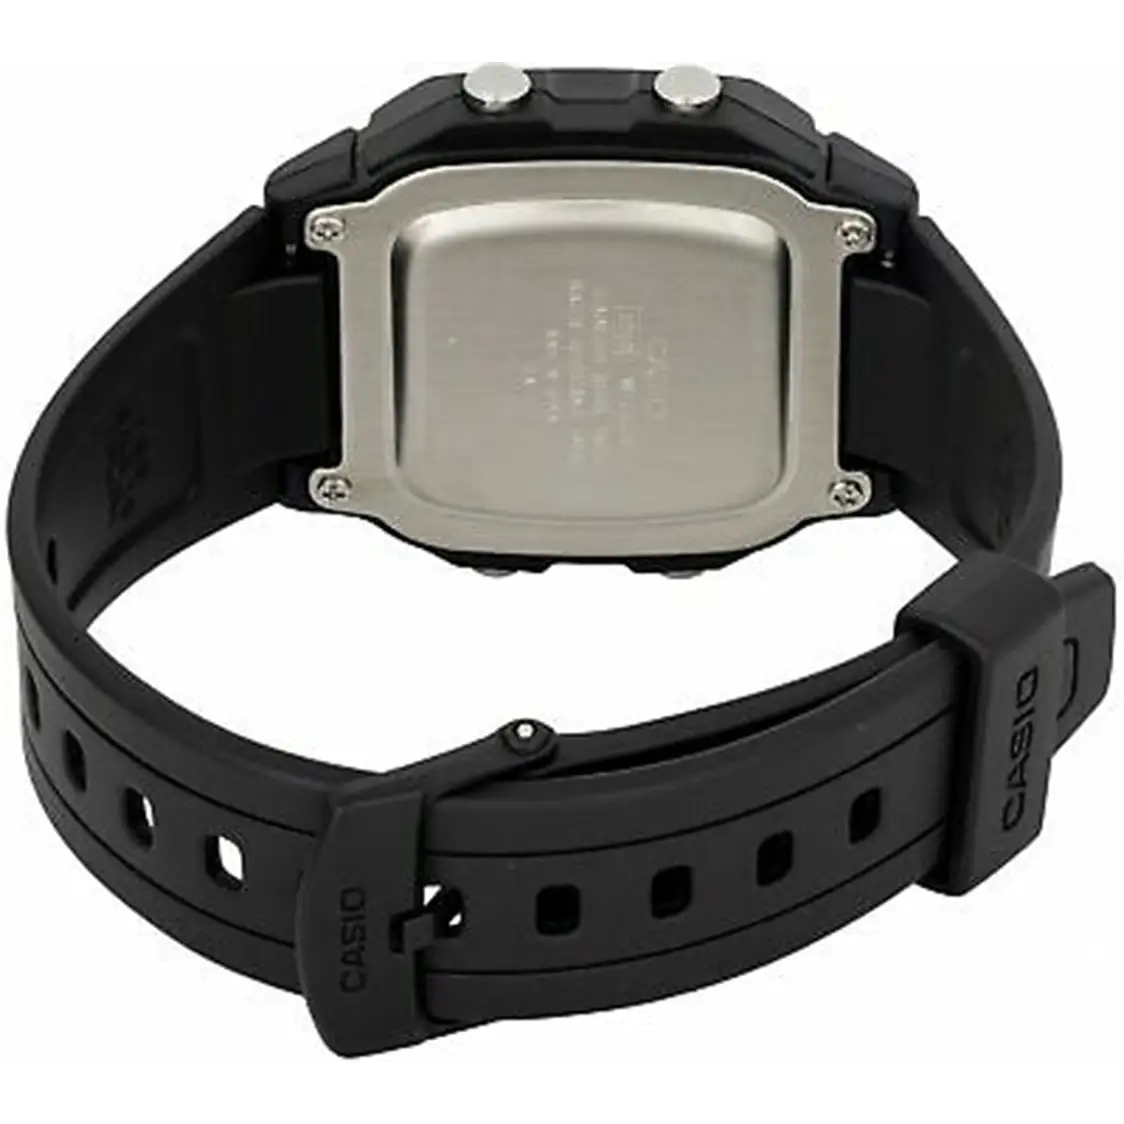 W800H-1AV, Black Digital Watch